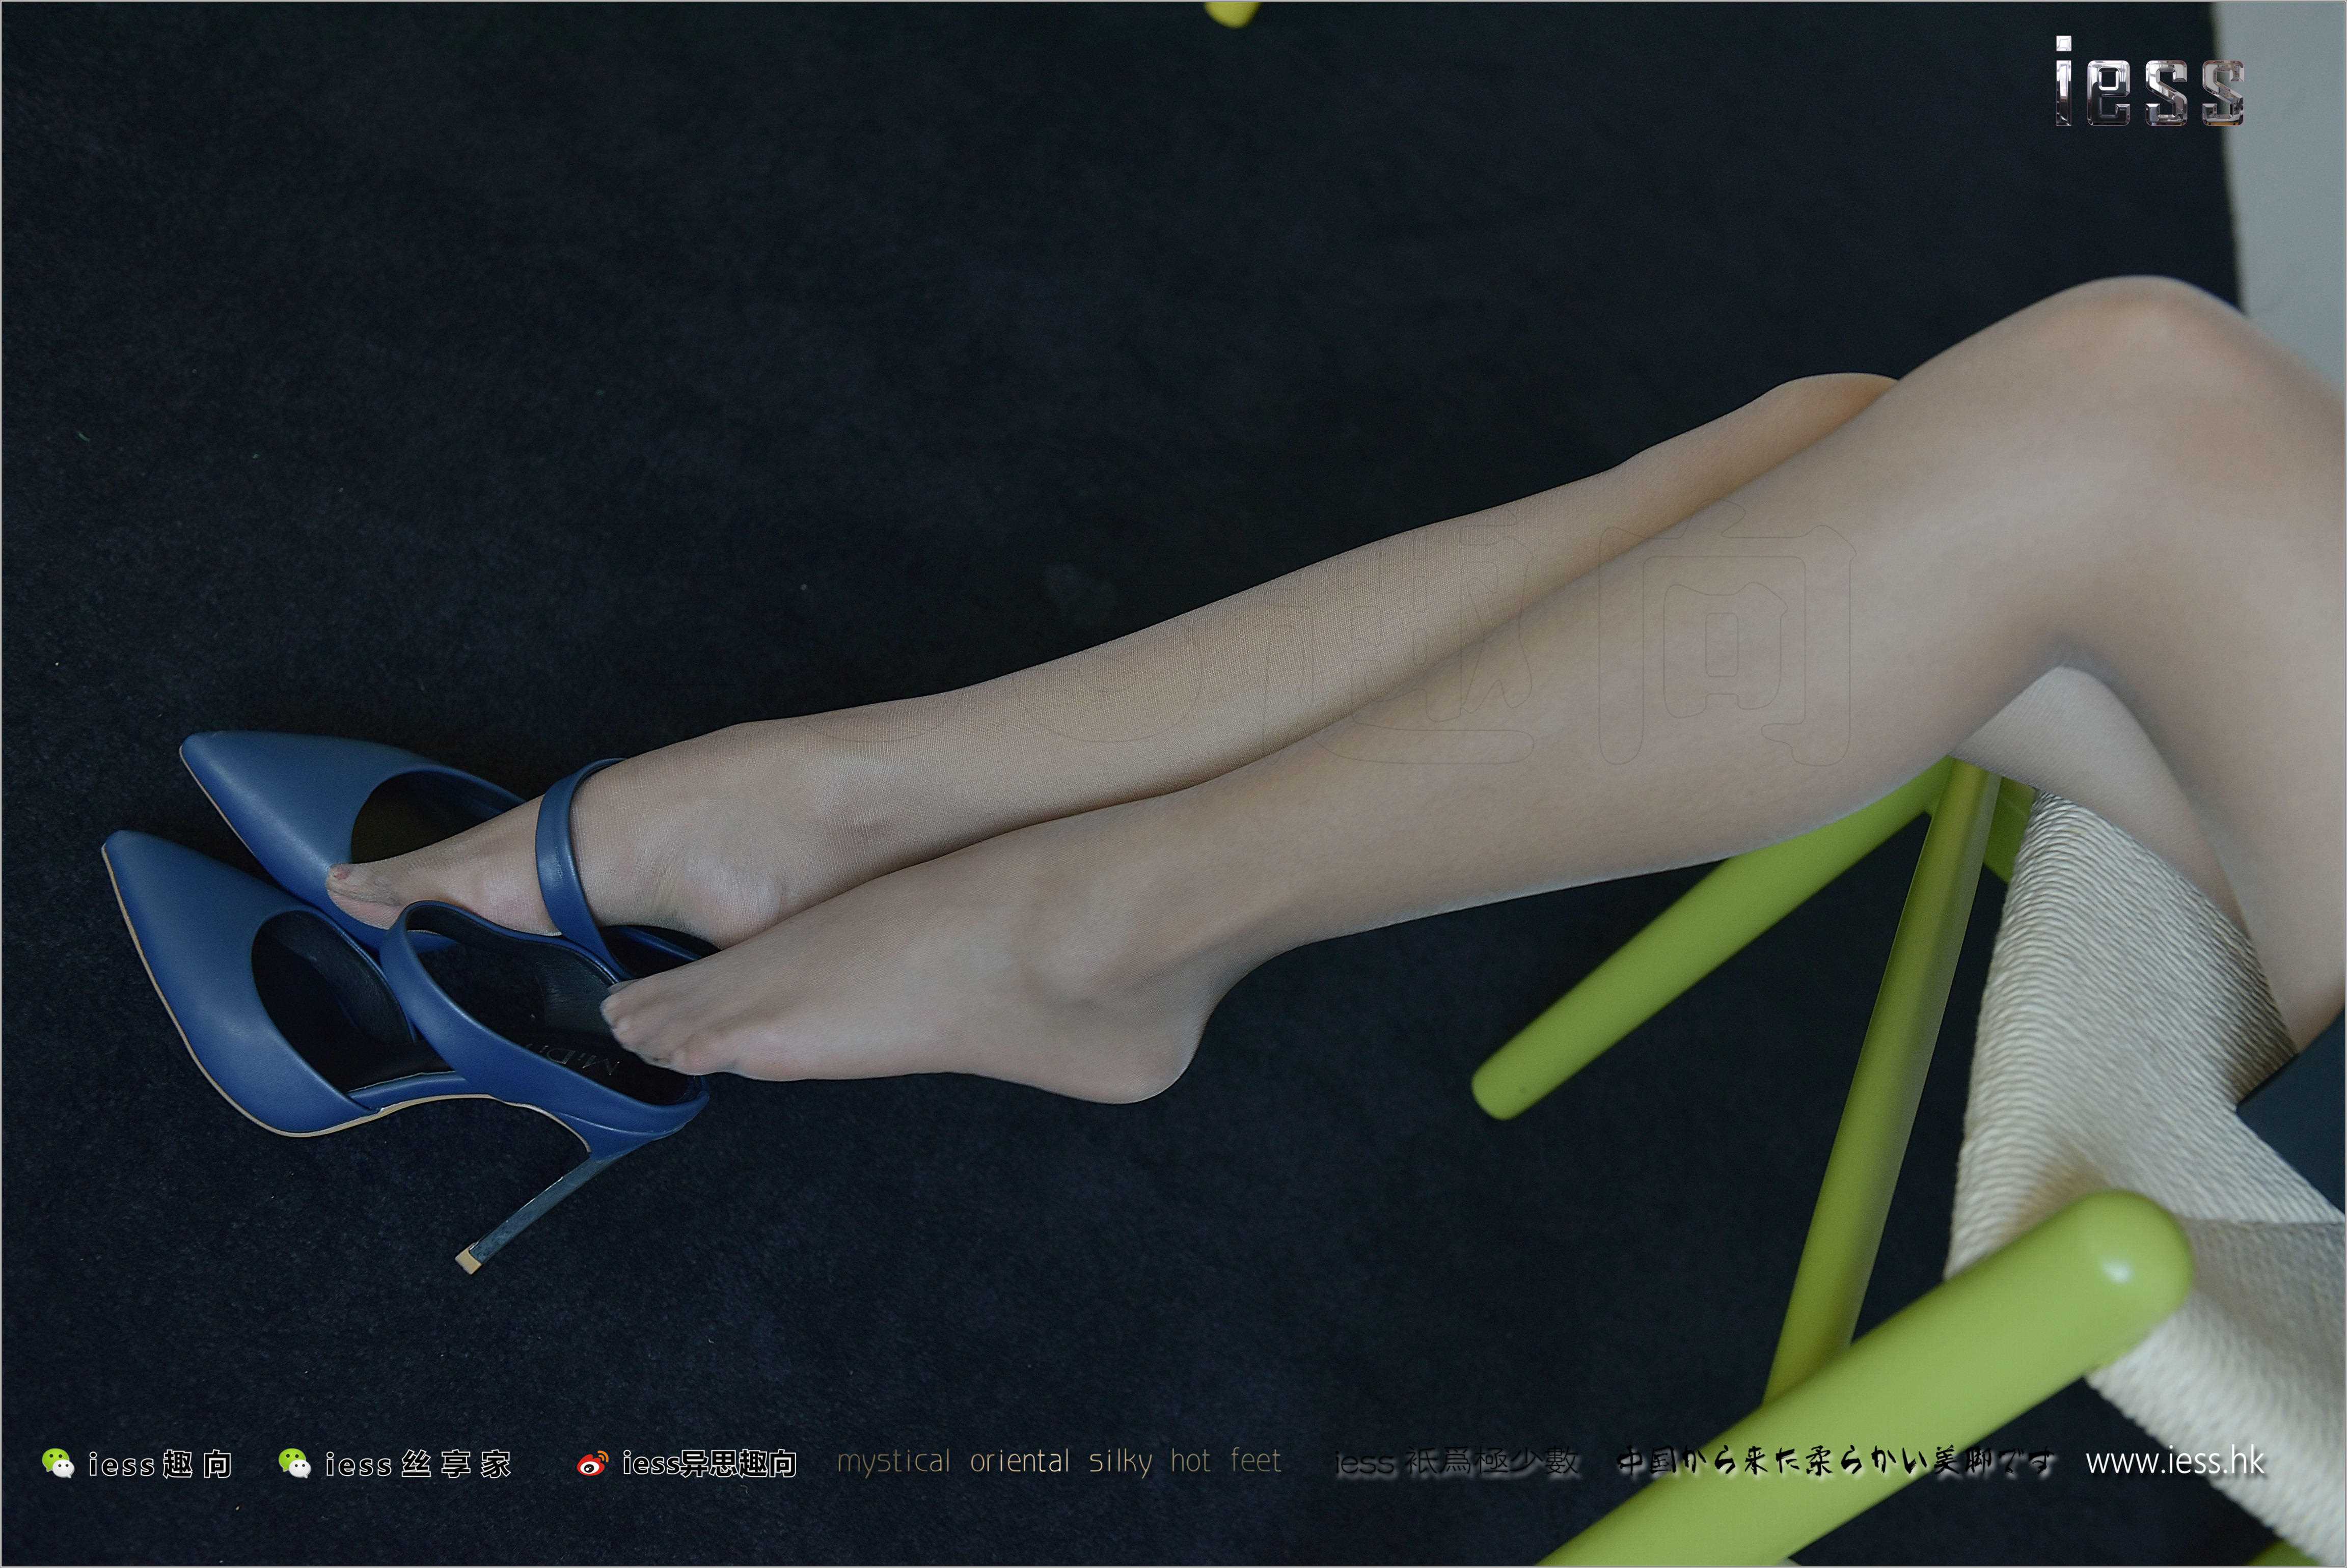 China Beauty Legs and feet 261